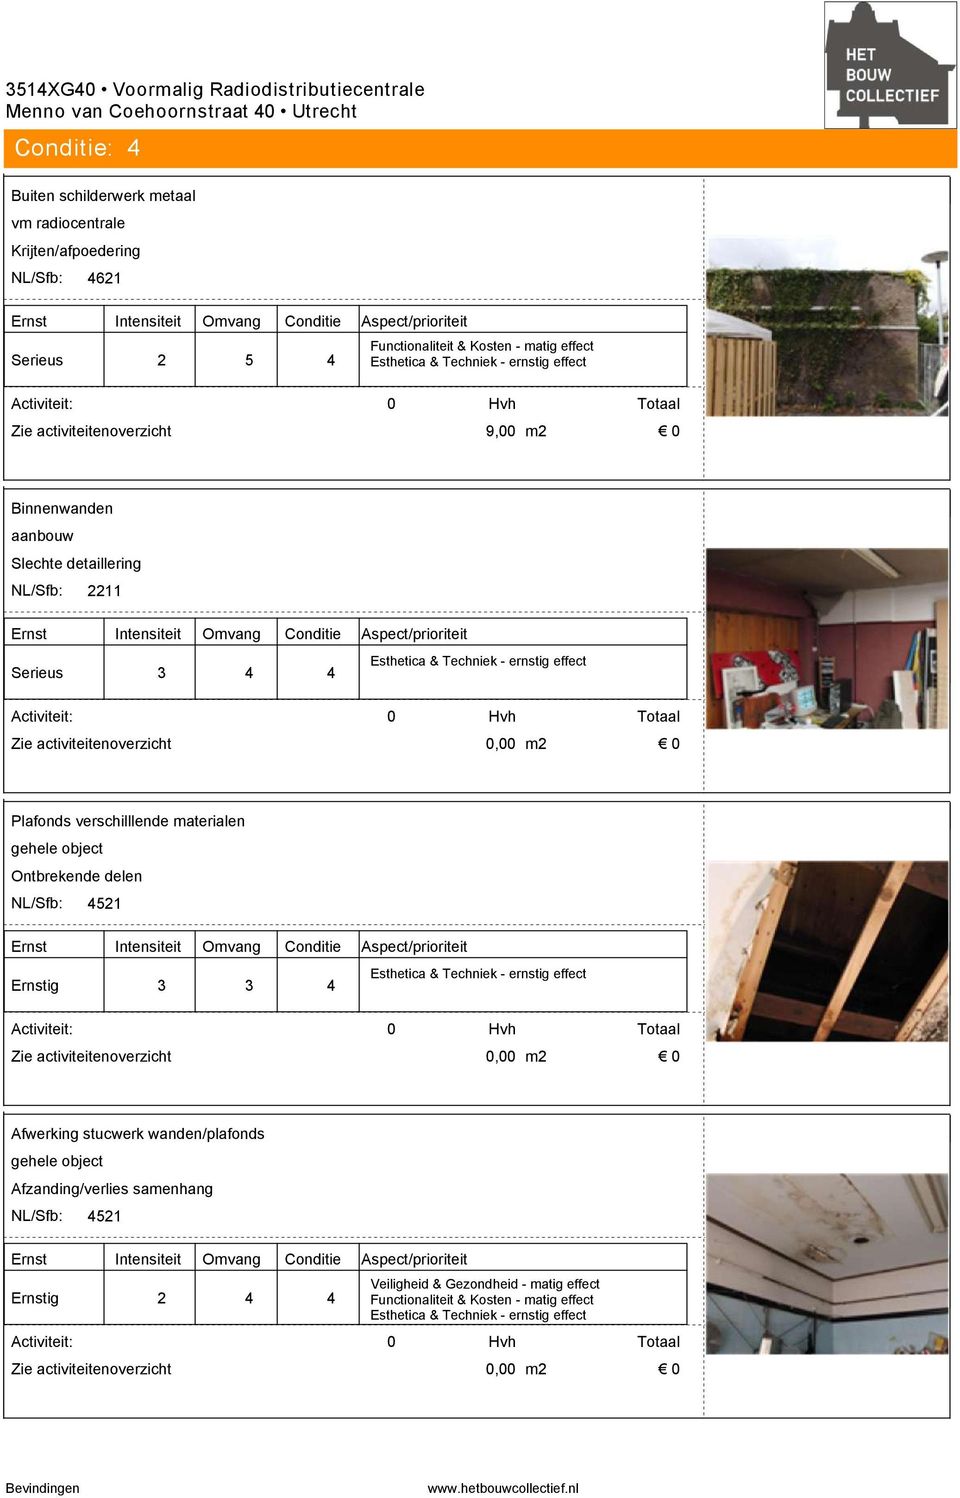 3 4 4, m2 Plafonds verschilllende materialen Ontbrekende delen NL/Sfb: 4521 Ernstig 3 3 4, m2 Afwerking stucwerk wanden/plafonds Afzanding/verlies